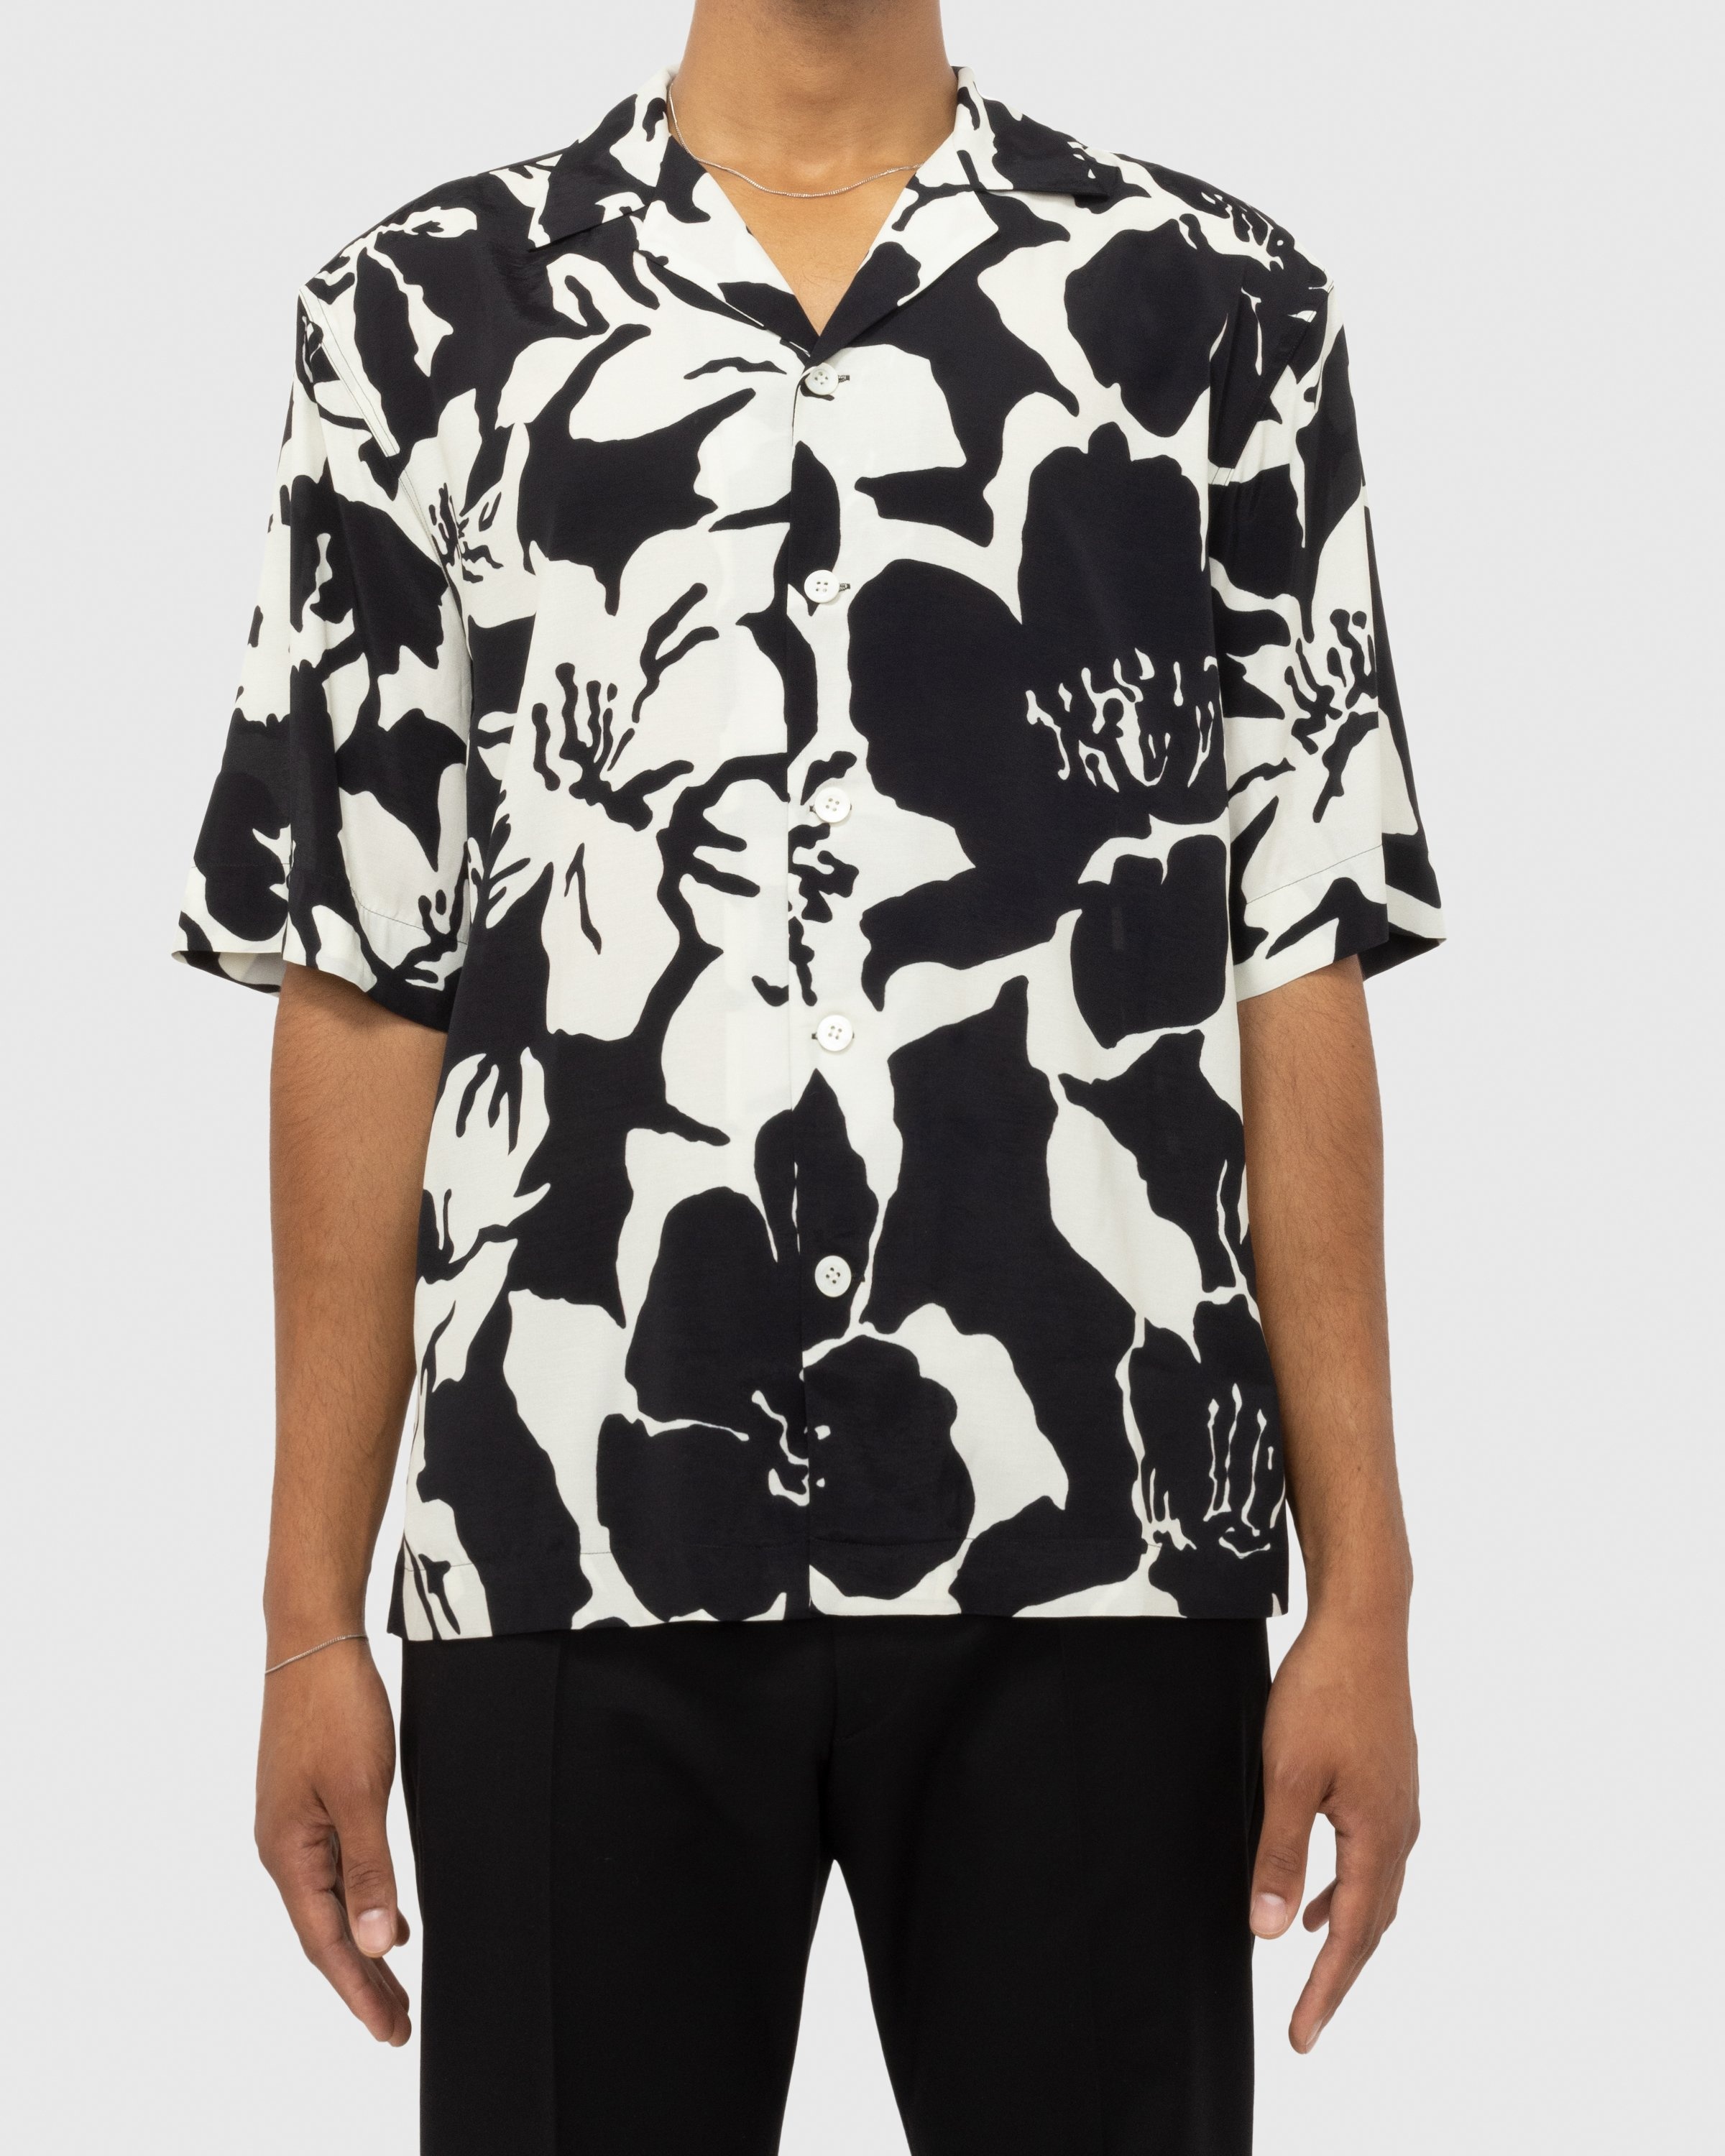 Dries van Noten – Floral Cassi Shirt Multi - Shortsleeve Shirts - Multi - Image 2